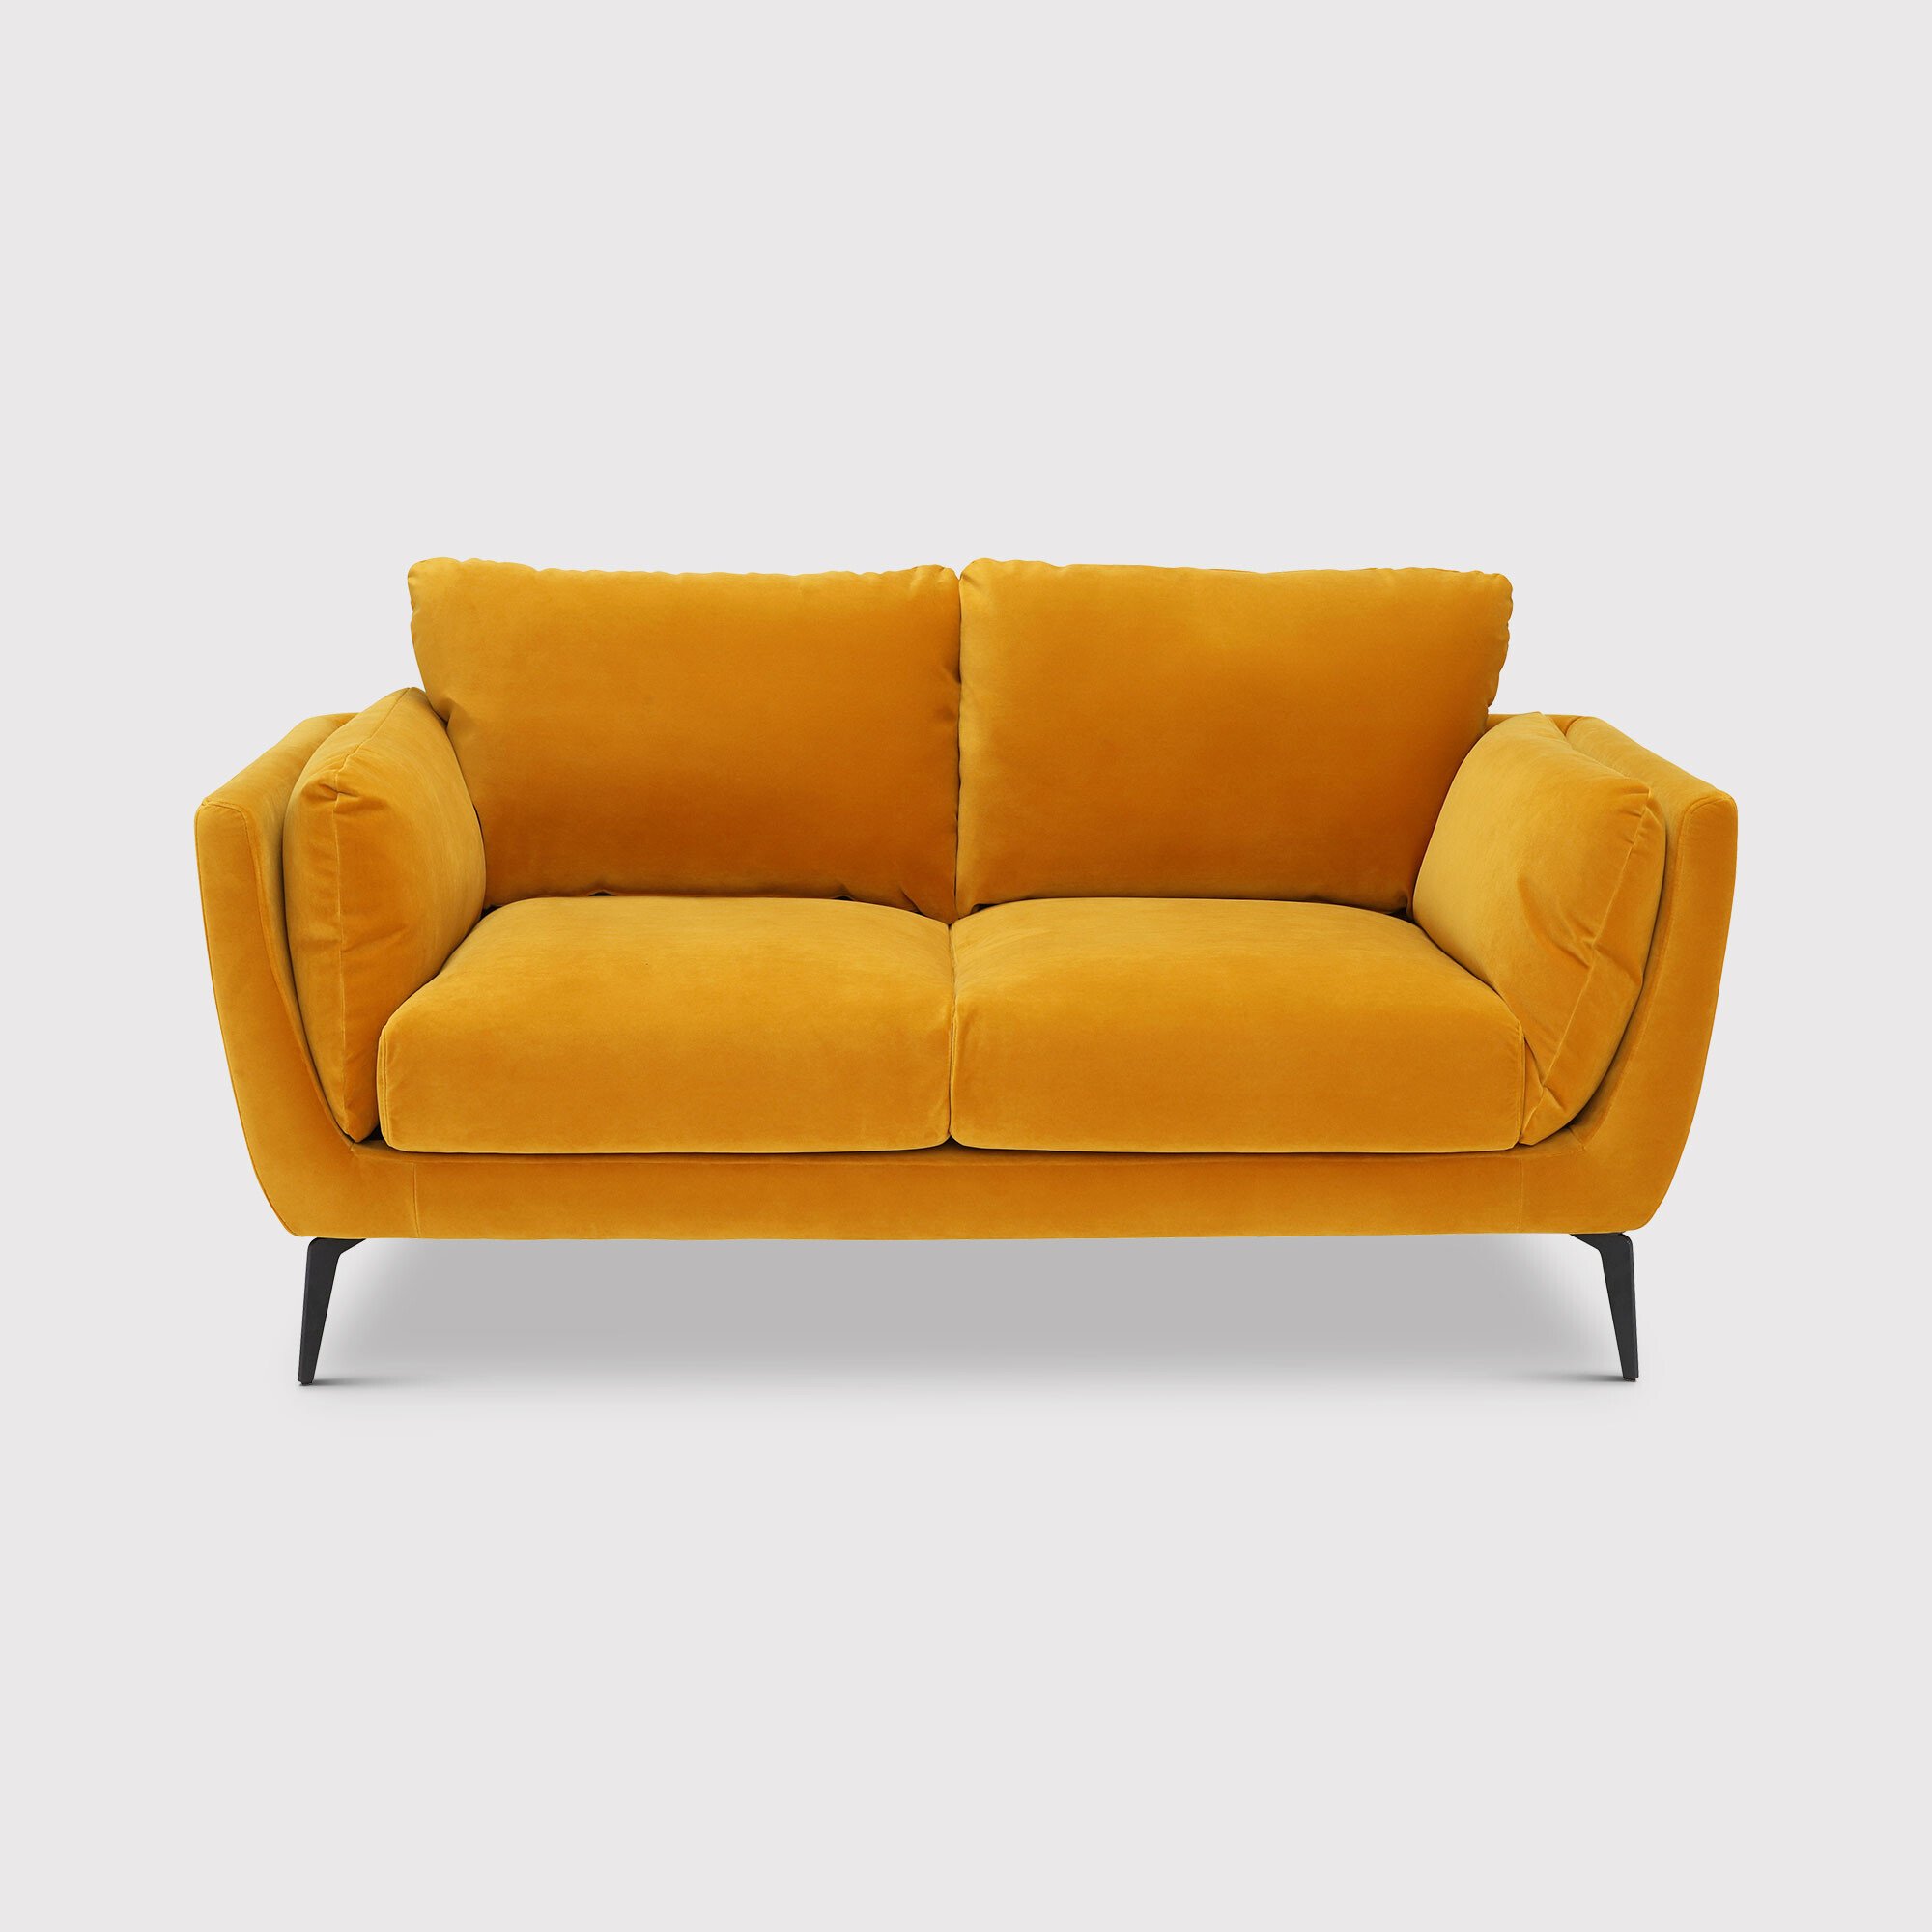 Boone 2 Seater Sofa, Yellow Fabric | Barker & Stonehouse